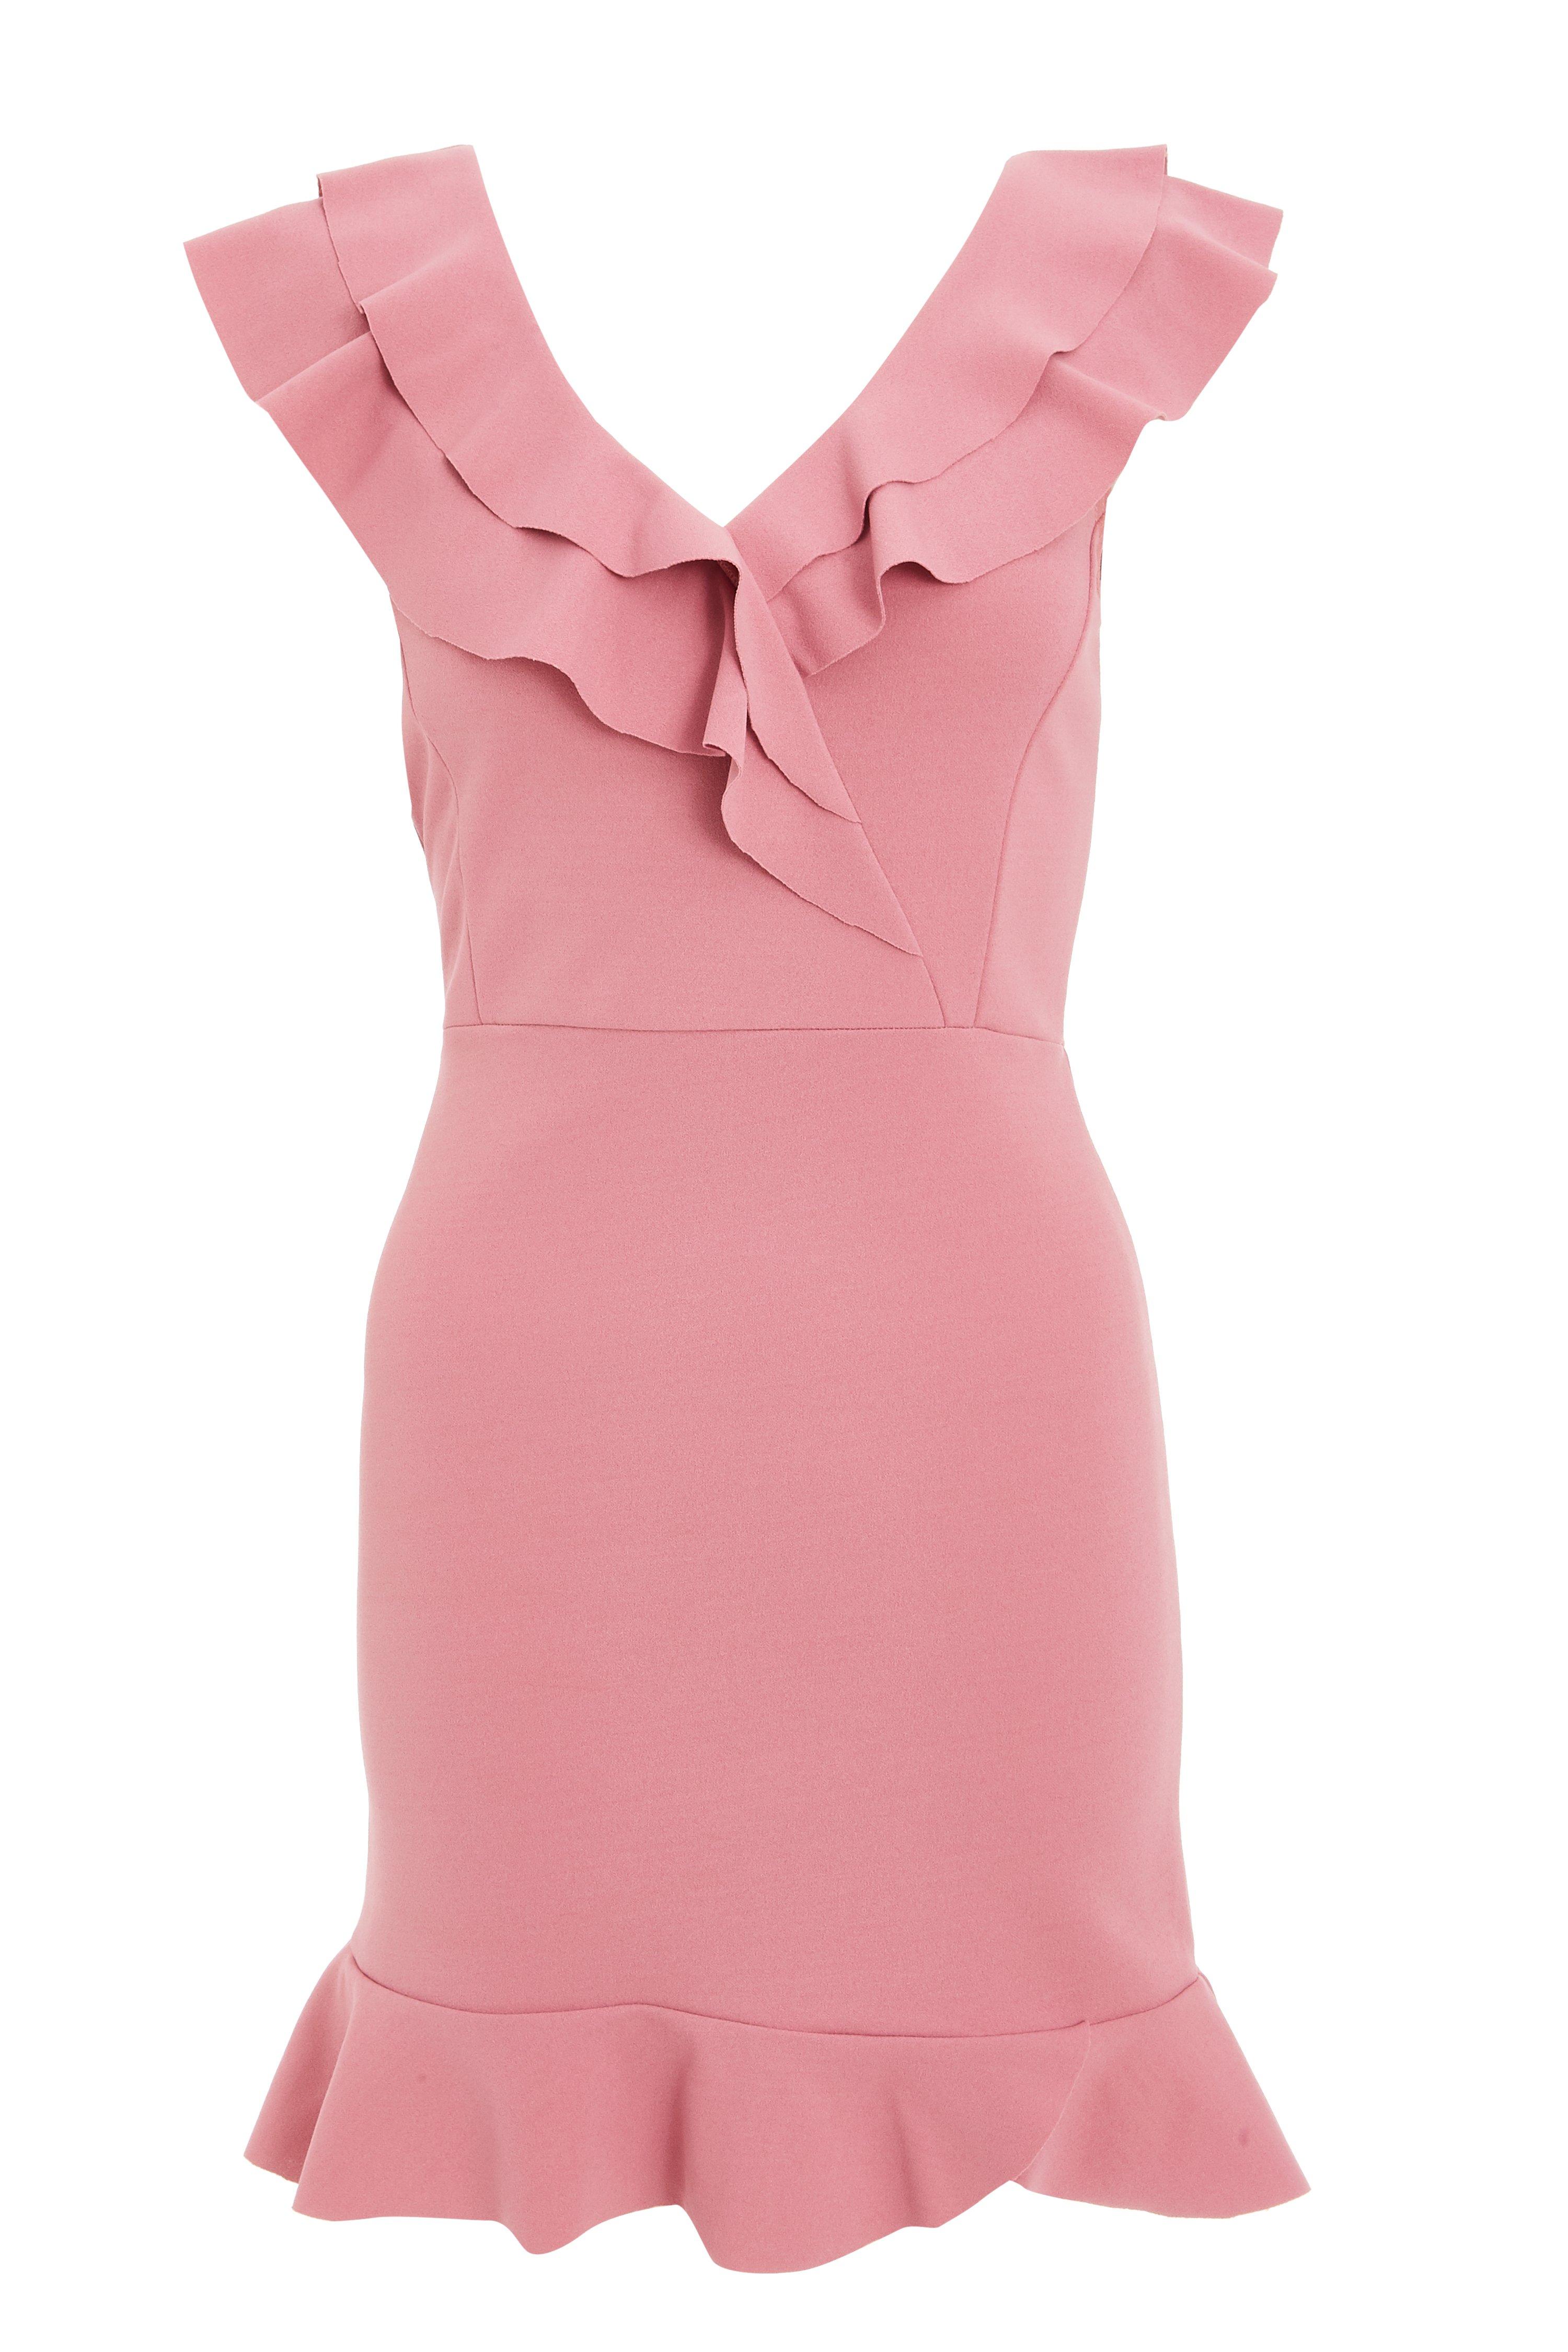 Petite Pink Frill V Neck Dress - Quiz Clothing